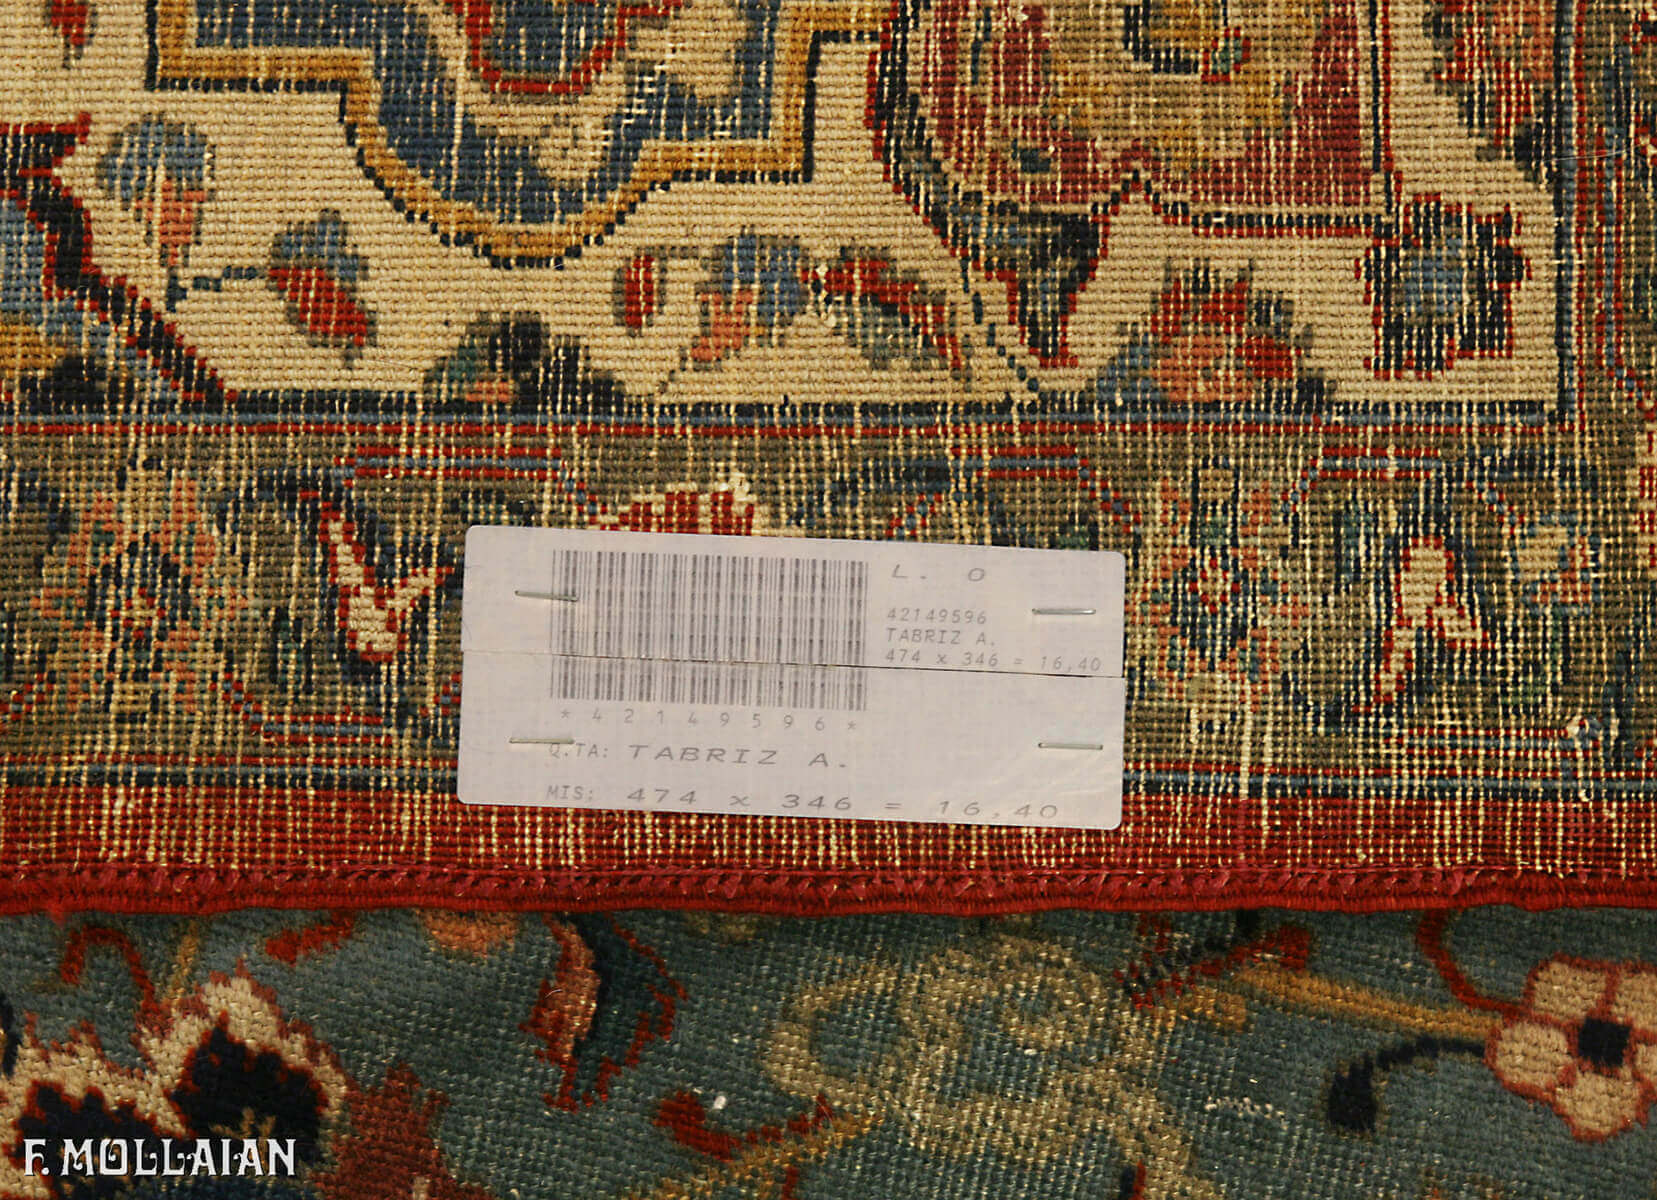 Antique Persian Tabriz Carpet n°:42149596